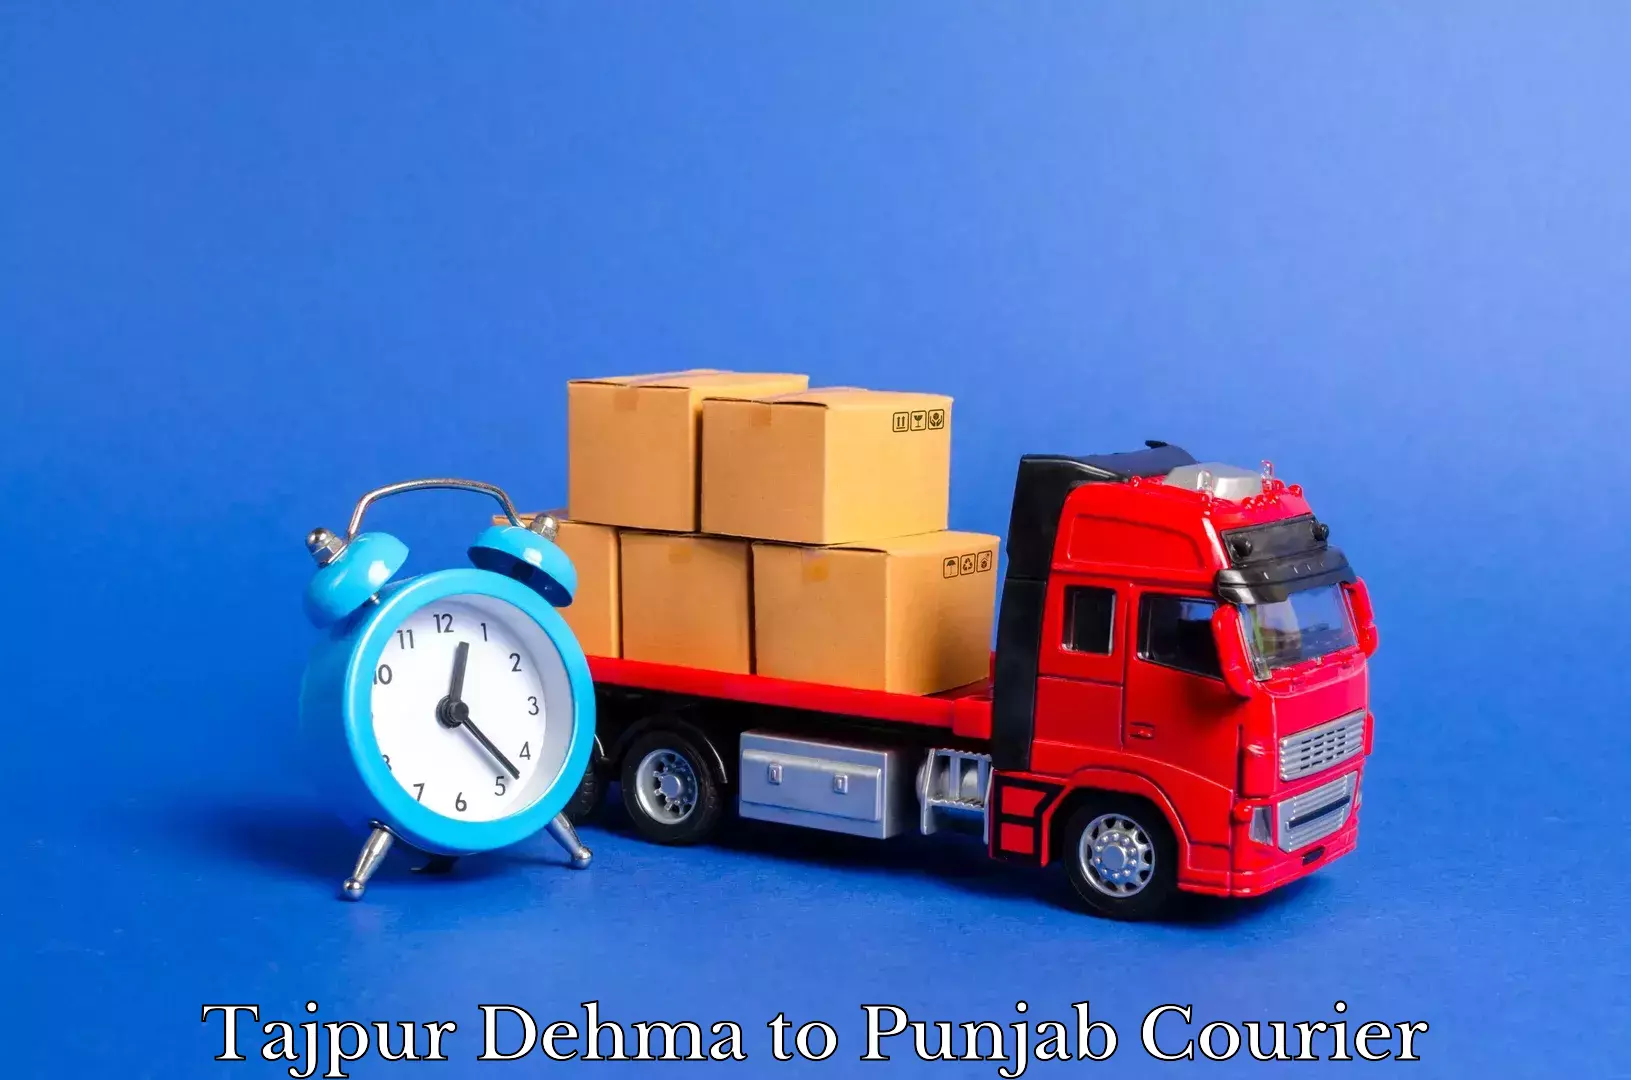 Budget-friendly movers Tajpur Dehma to Punjab